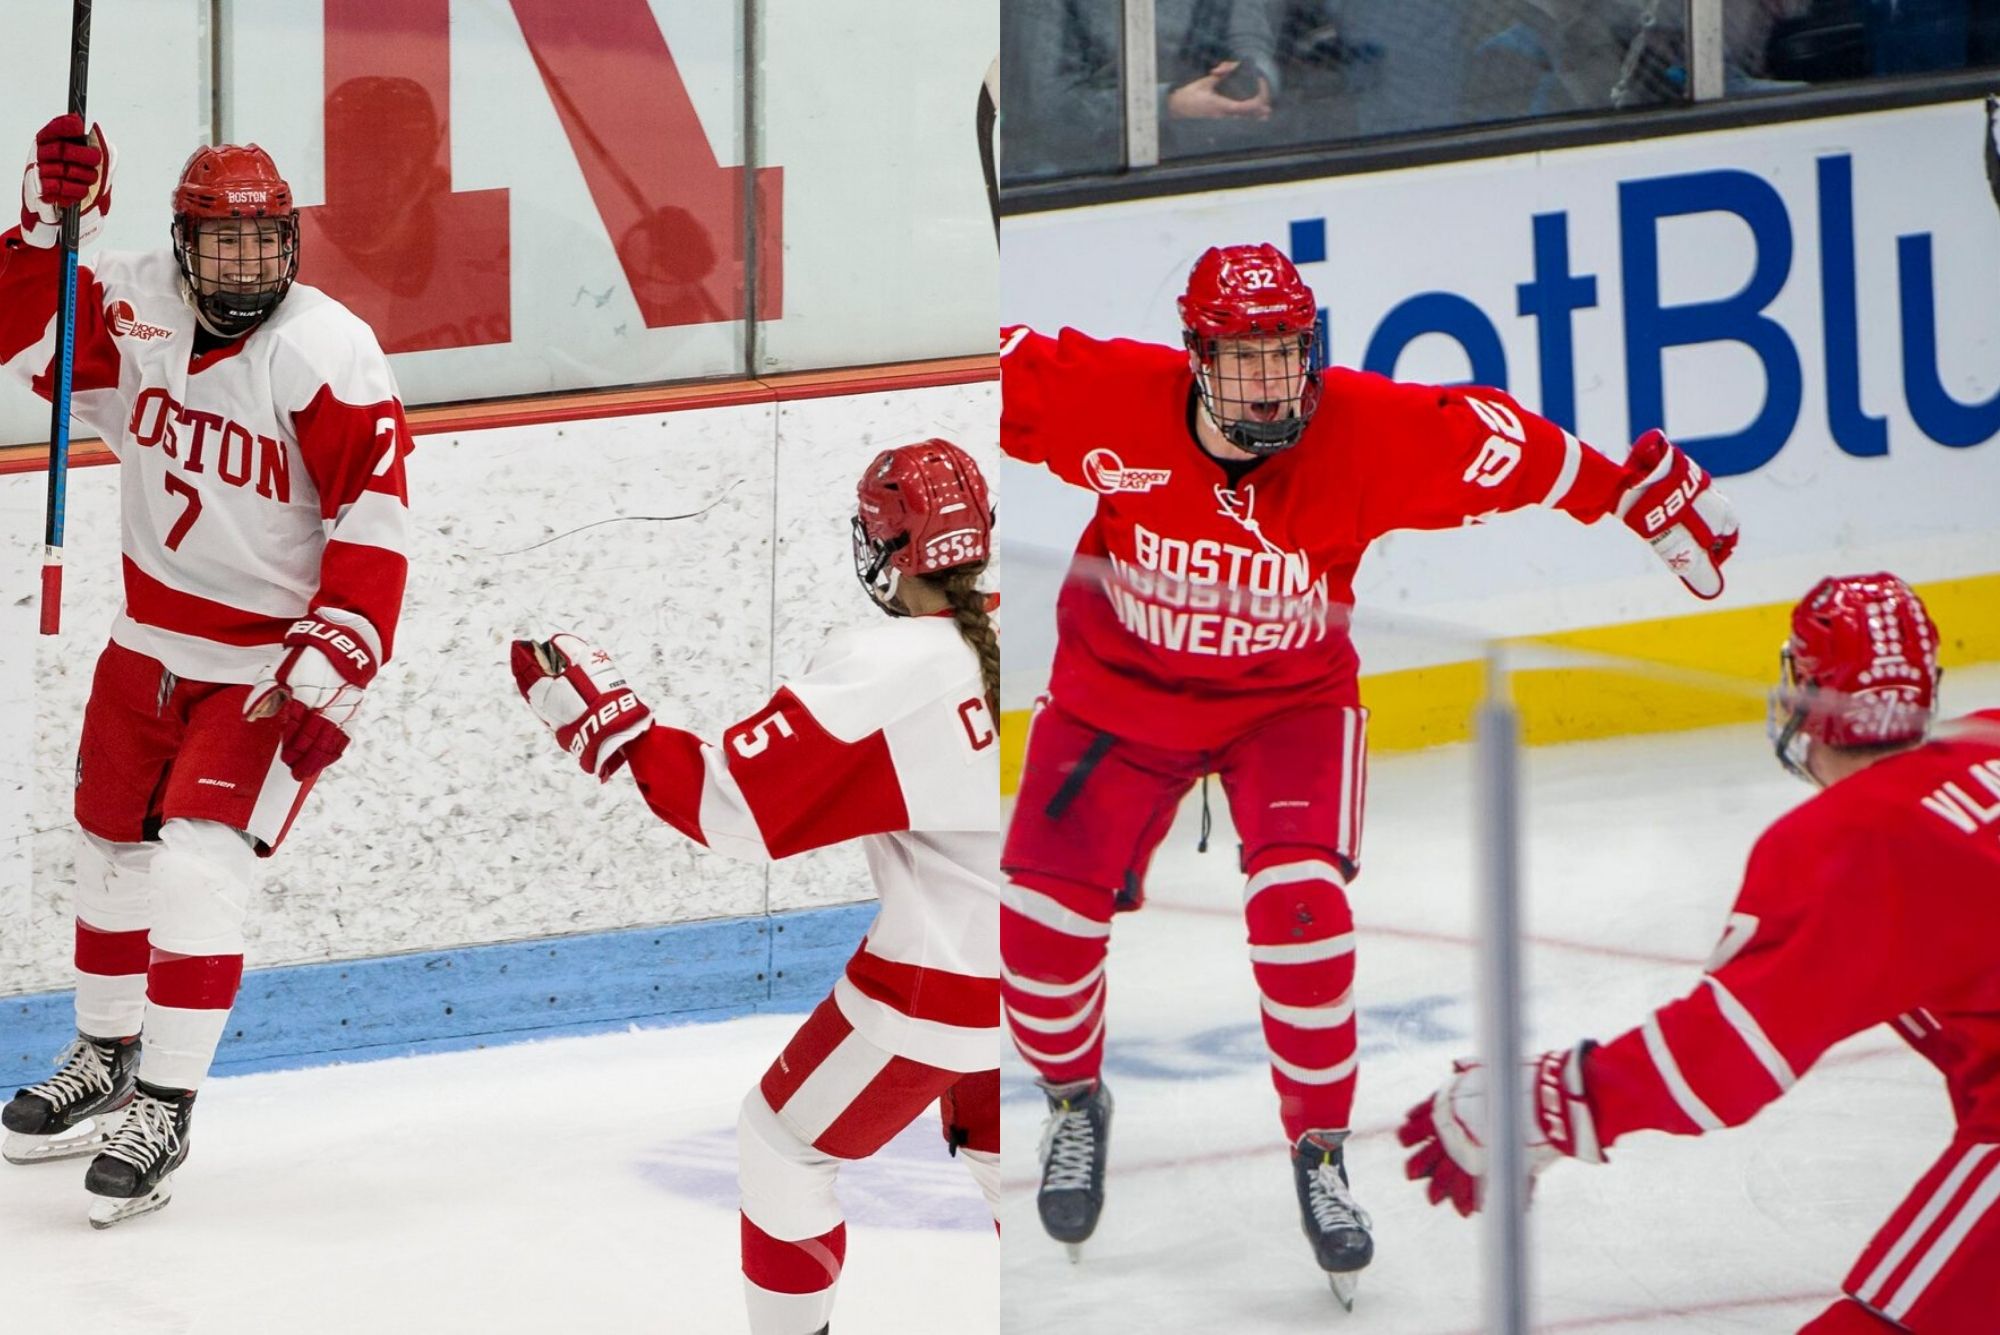 Men's Hockey to Battle Boston University for Beanpot Crown, Sports